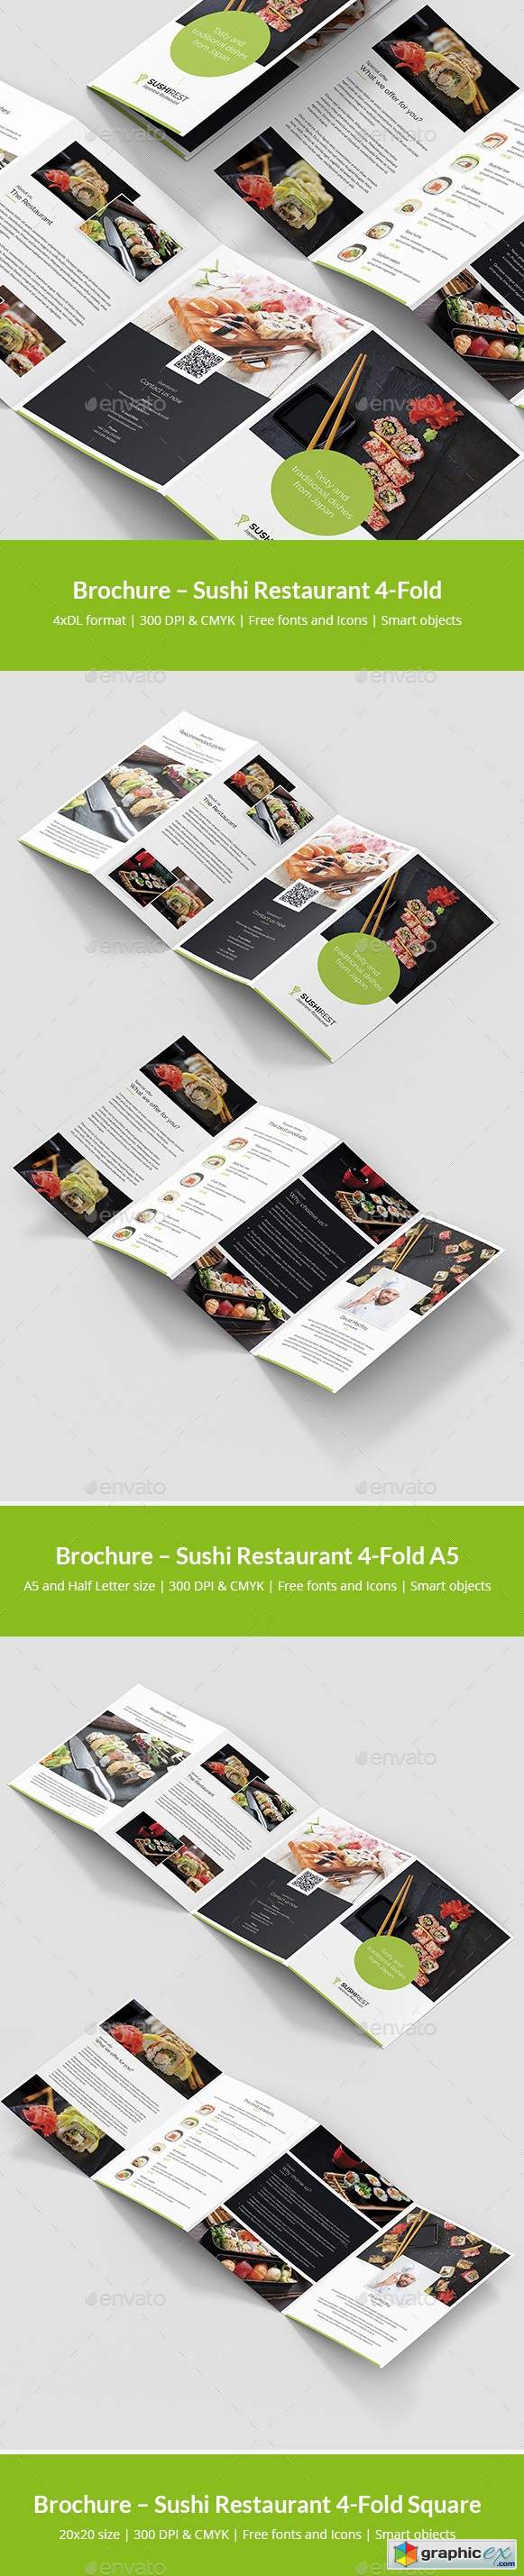 Sushi Restaurant – Brochures Bundle Print Templates 10 in 1